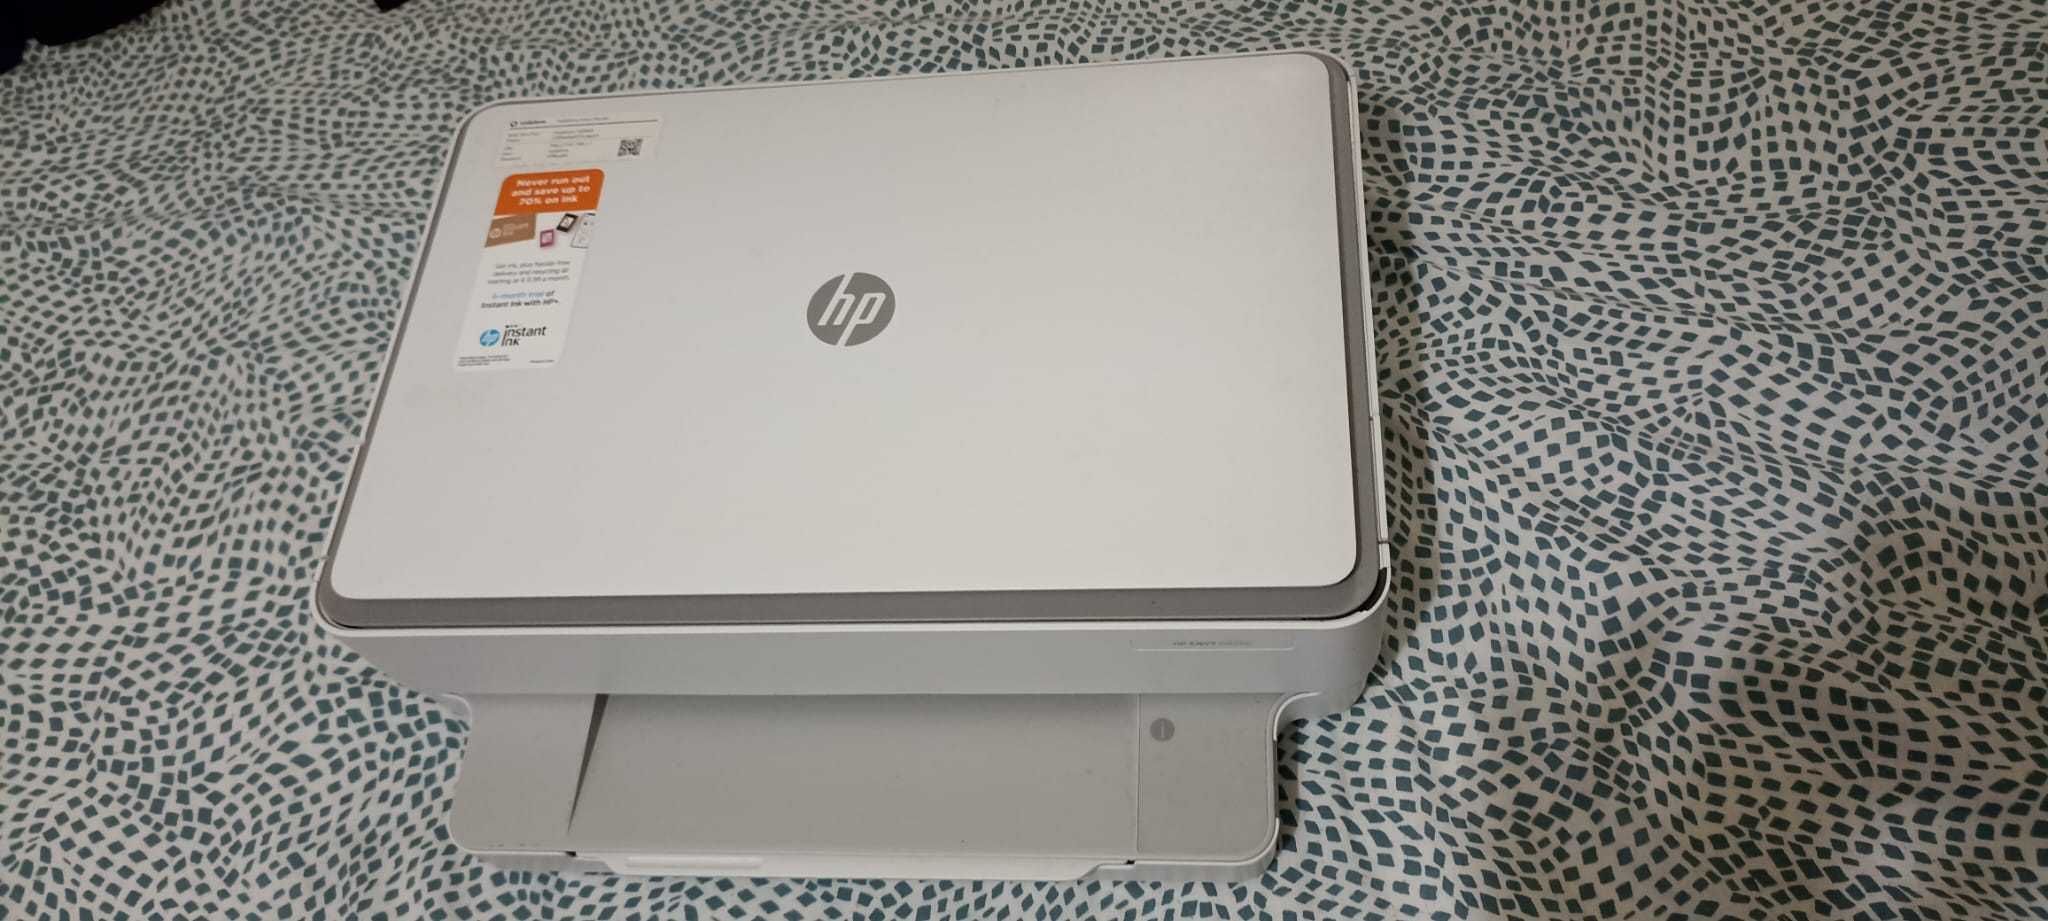 Impressora - HP Envy 6020e Multifunções a Cores WiFi Duplex Fax